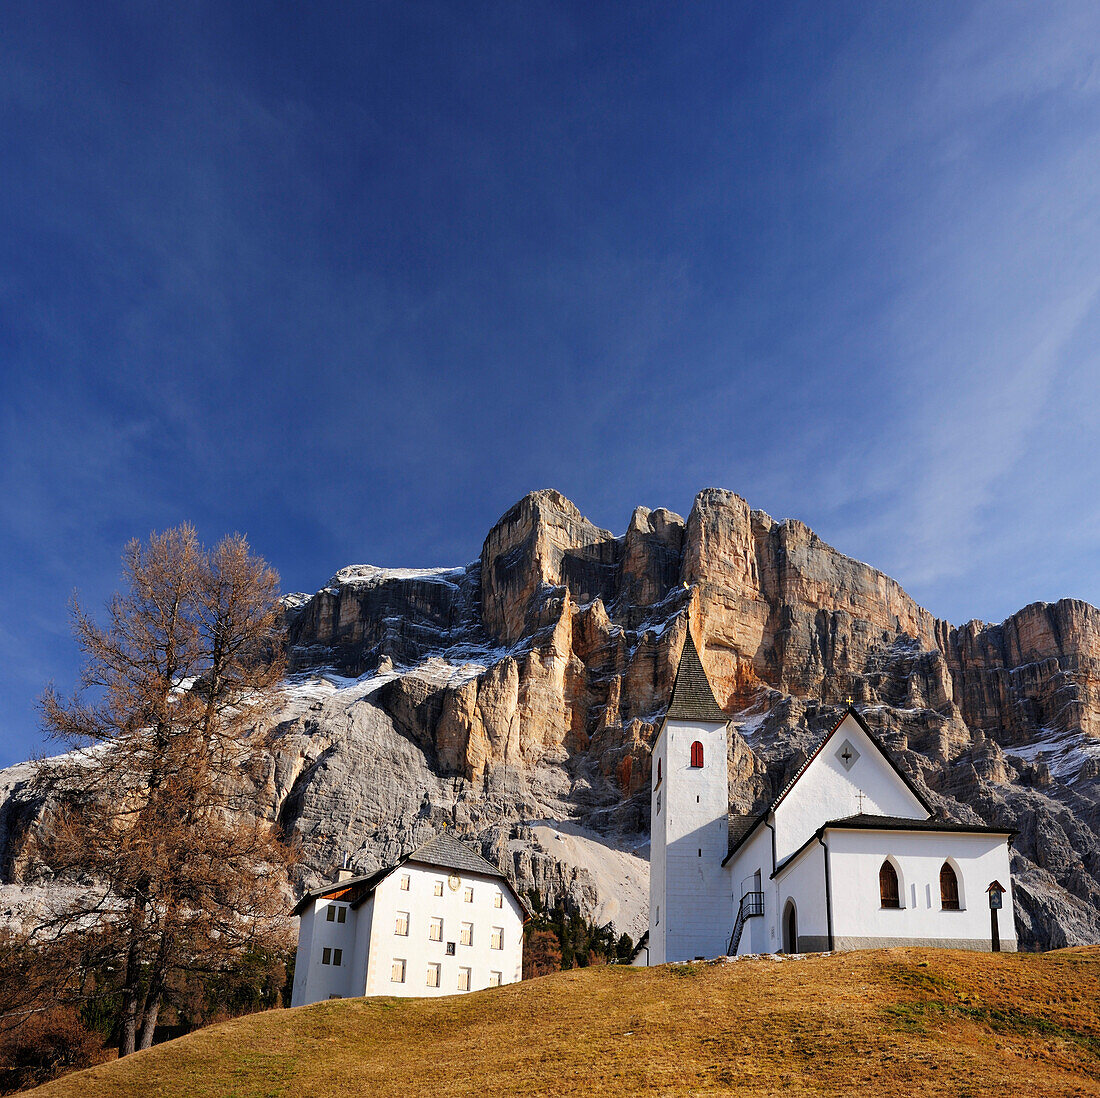 Farmhouse and church of Hospiz San Croce in front of rock faces of Heiligkreuzkofel, Heiligkreuzkofel, Fanes range, Dolomites, UNESCO World Heritage Site Dolomites, South Tyrol, Italy, Europe